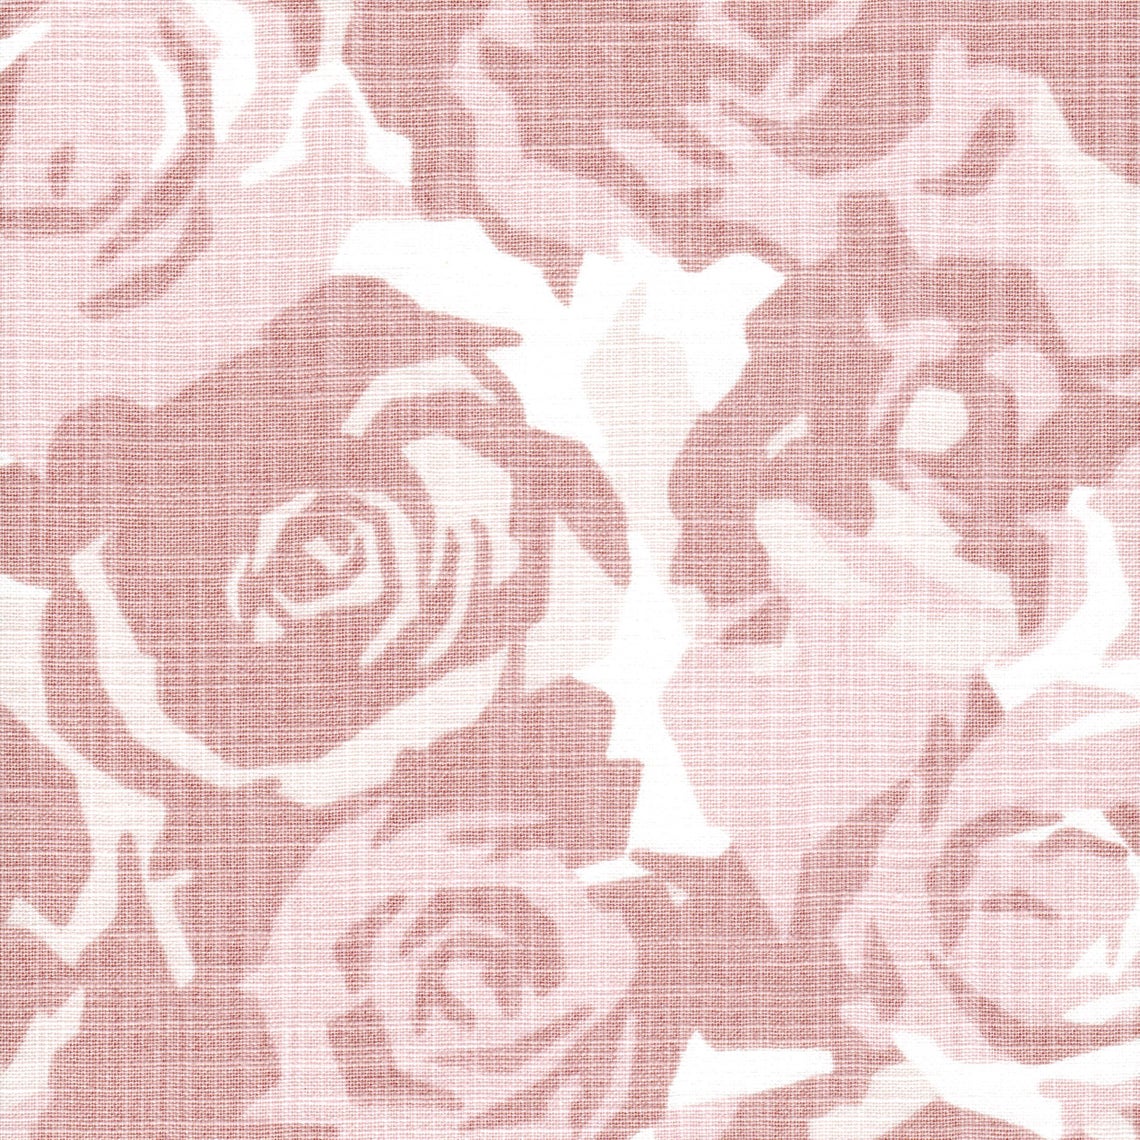 duvet cover in farrah blush floral